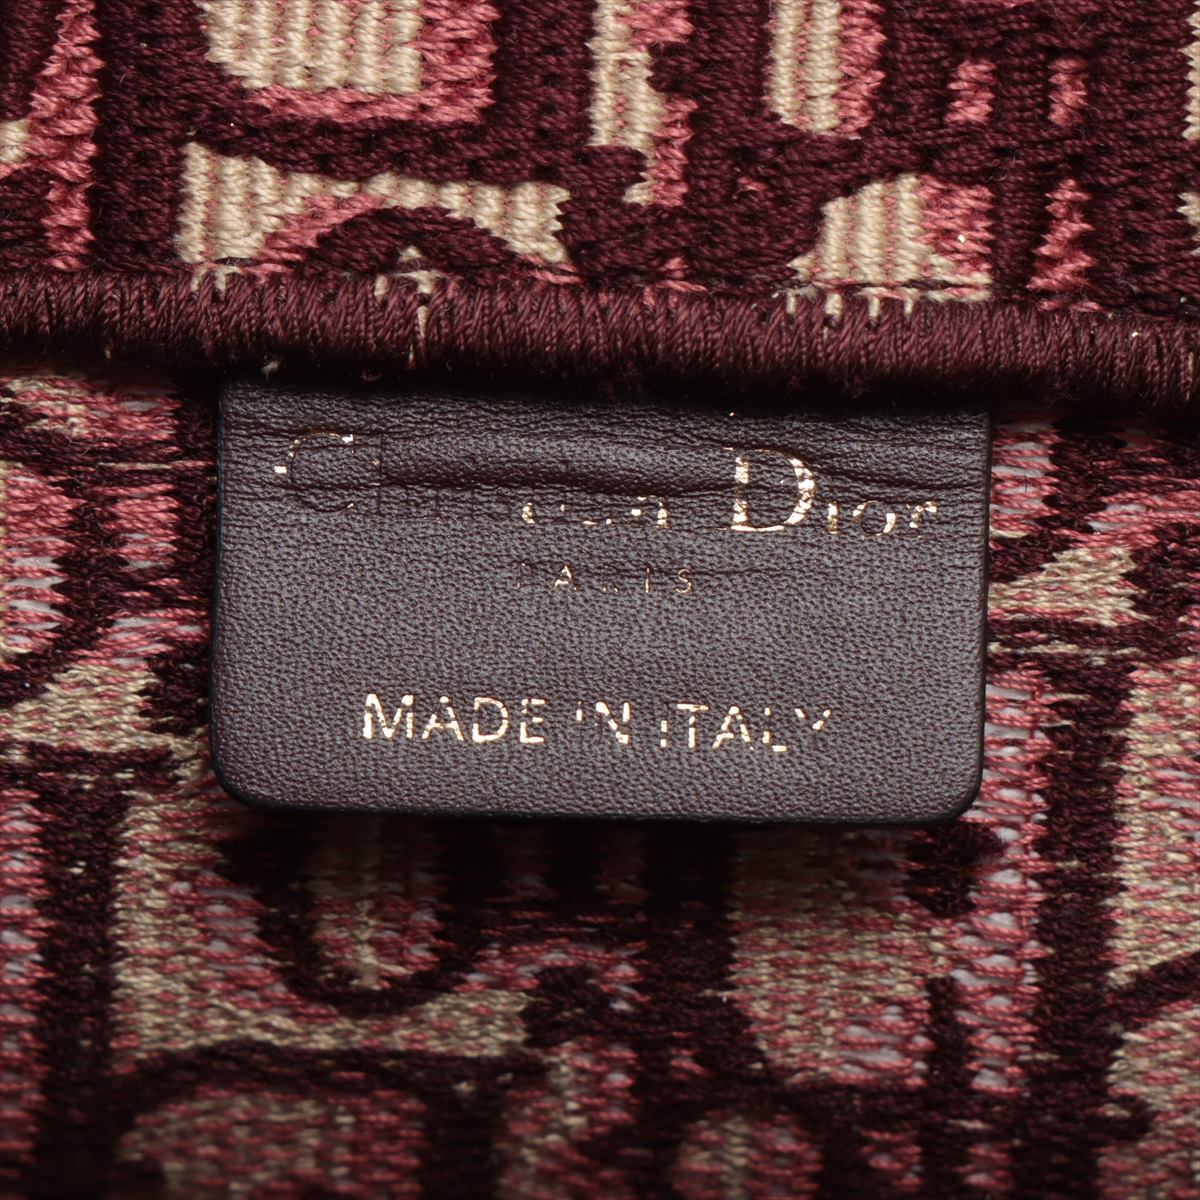 Christian Dior Large Navy Oblique Book Tote Bag - THE PURSE AFFAIR